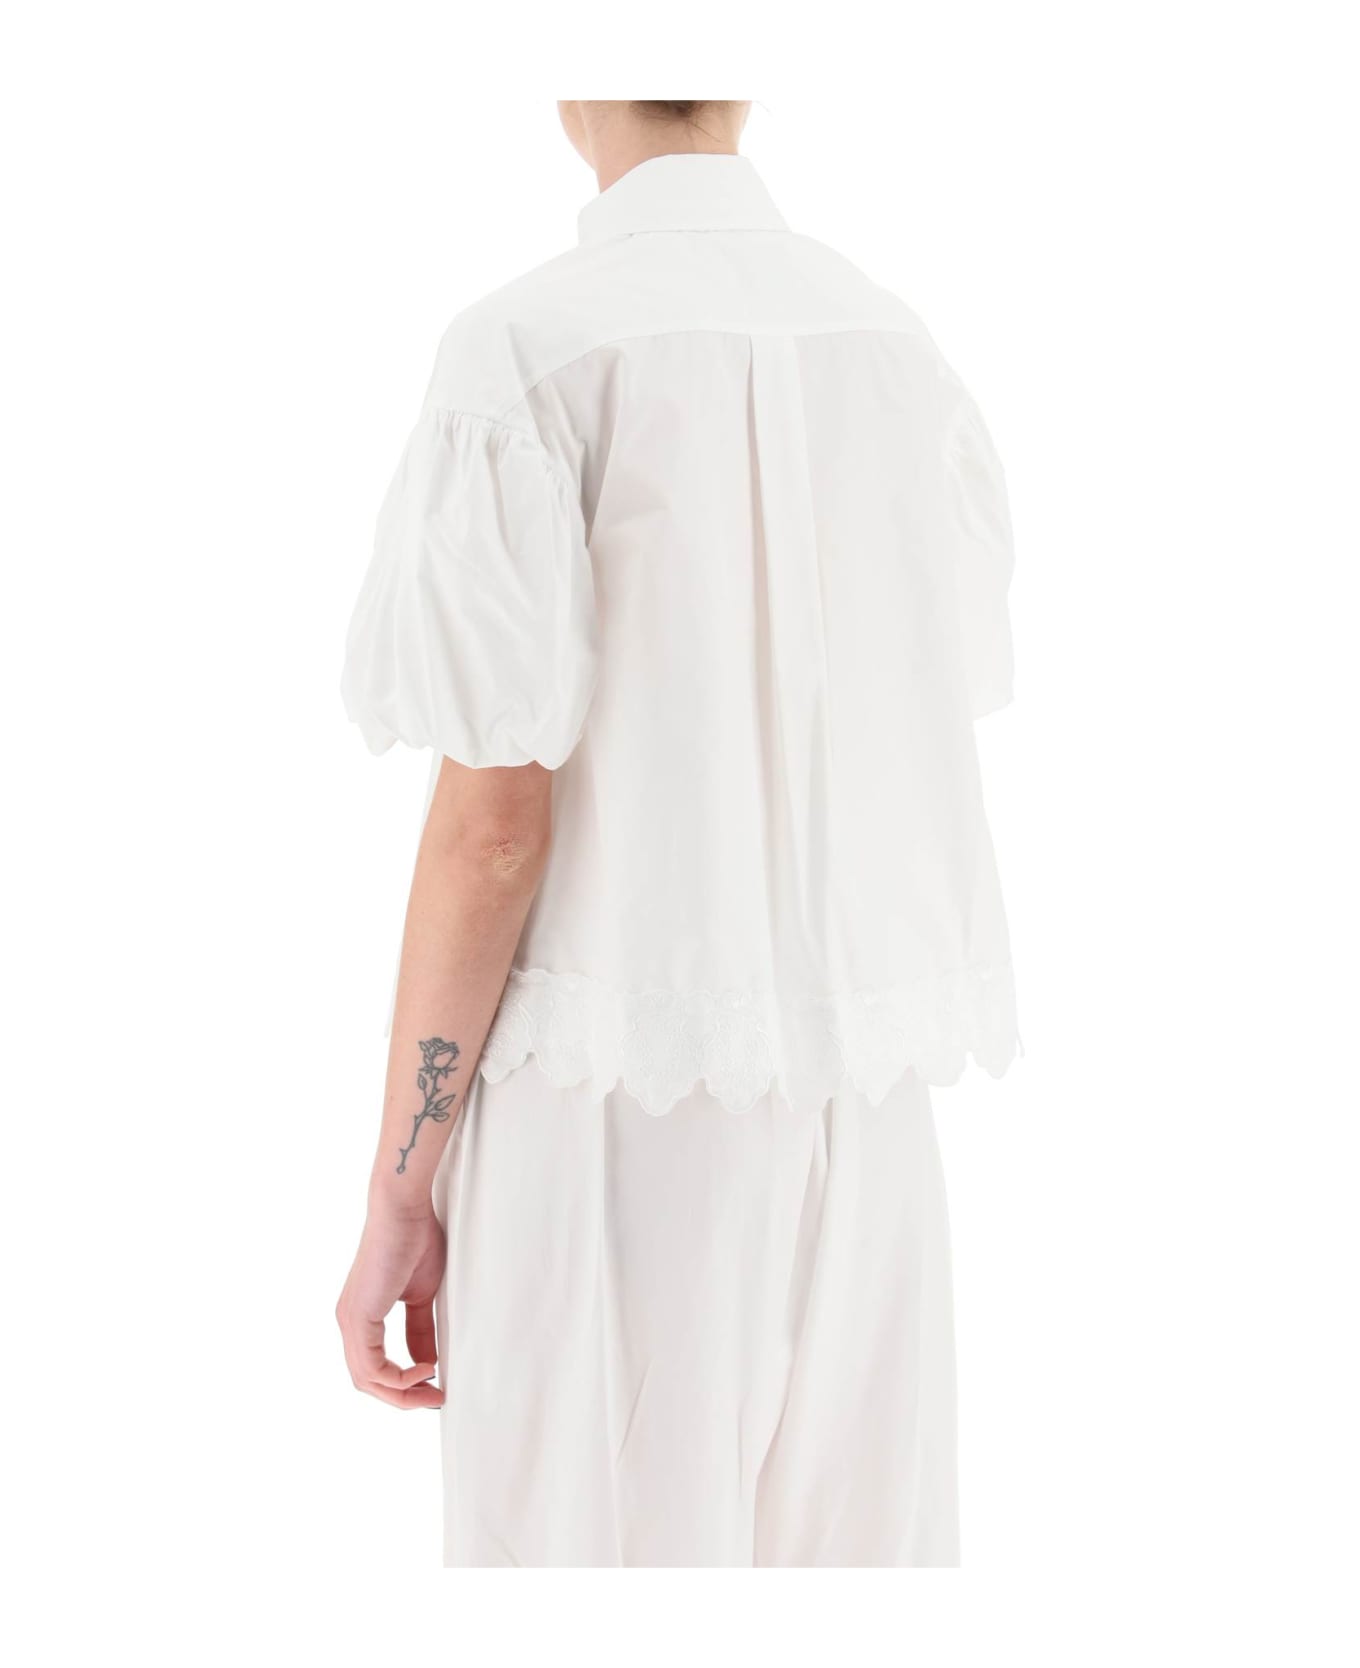 Simone Rocha Cropped Shirt With Embrodered Trim - WHITE WHITE (White)